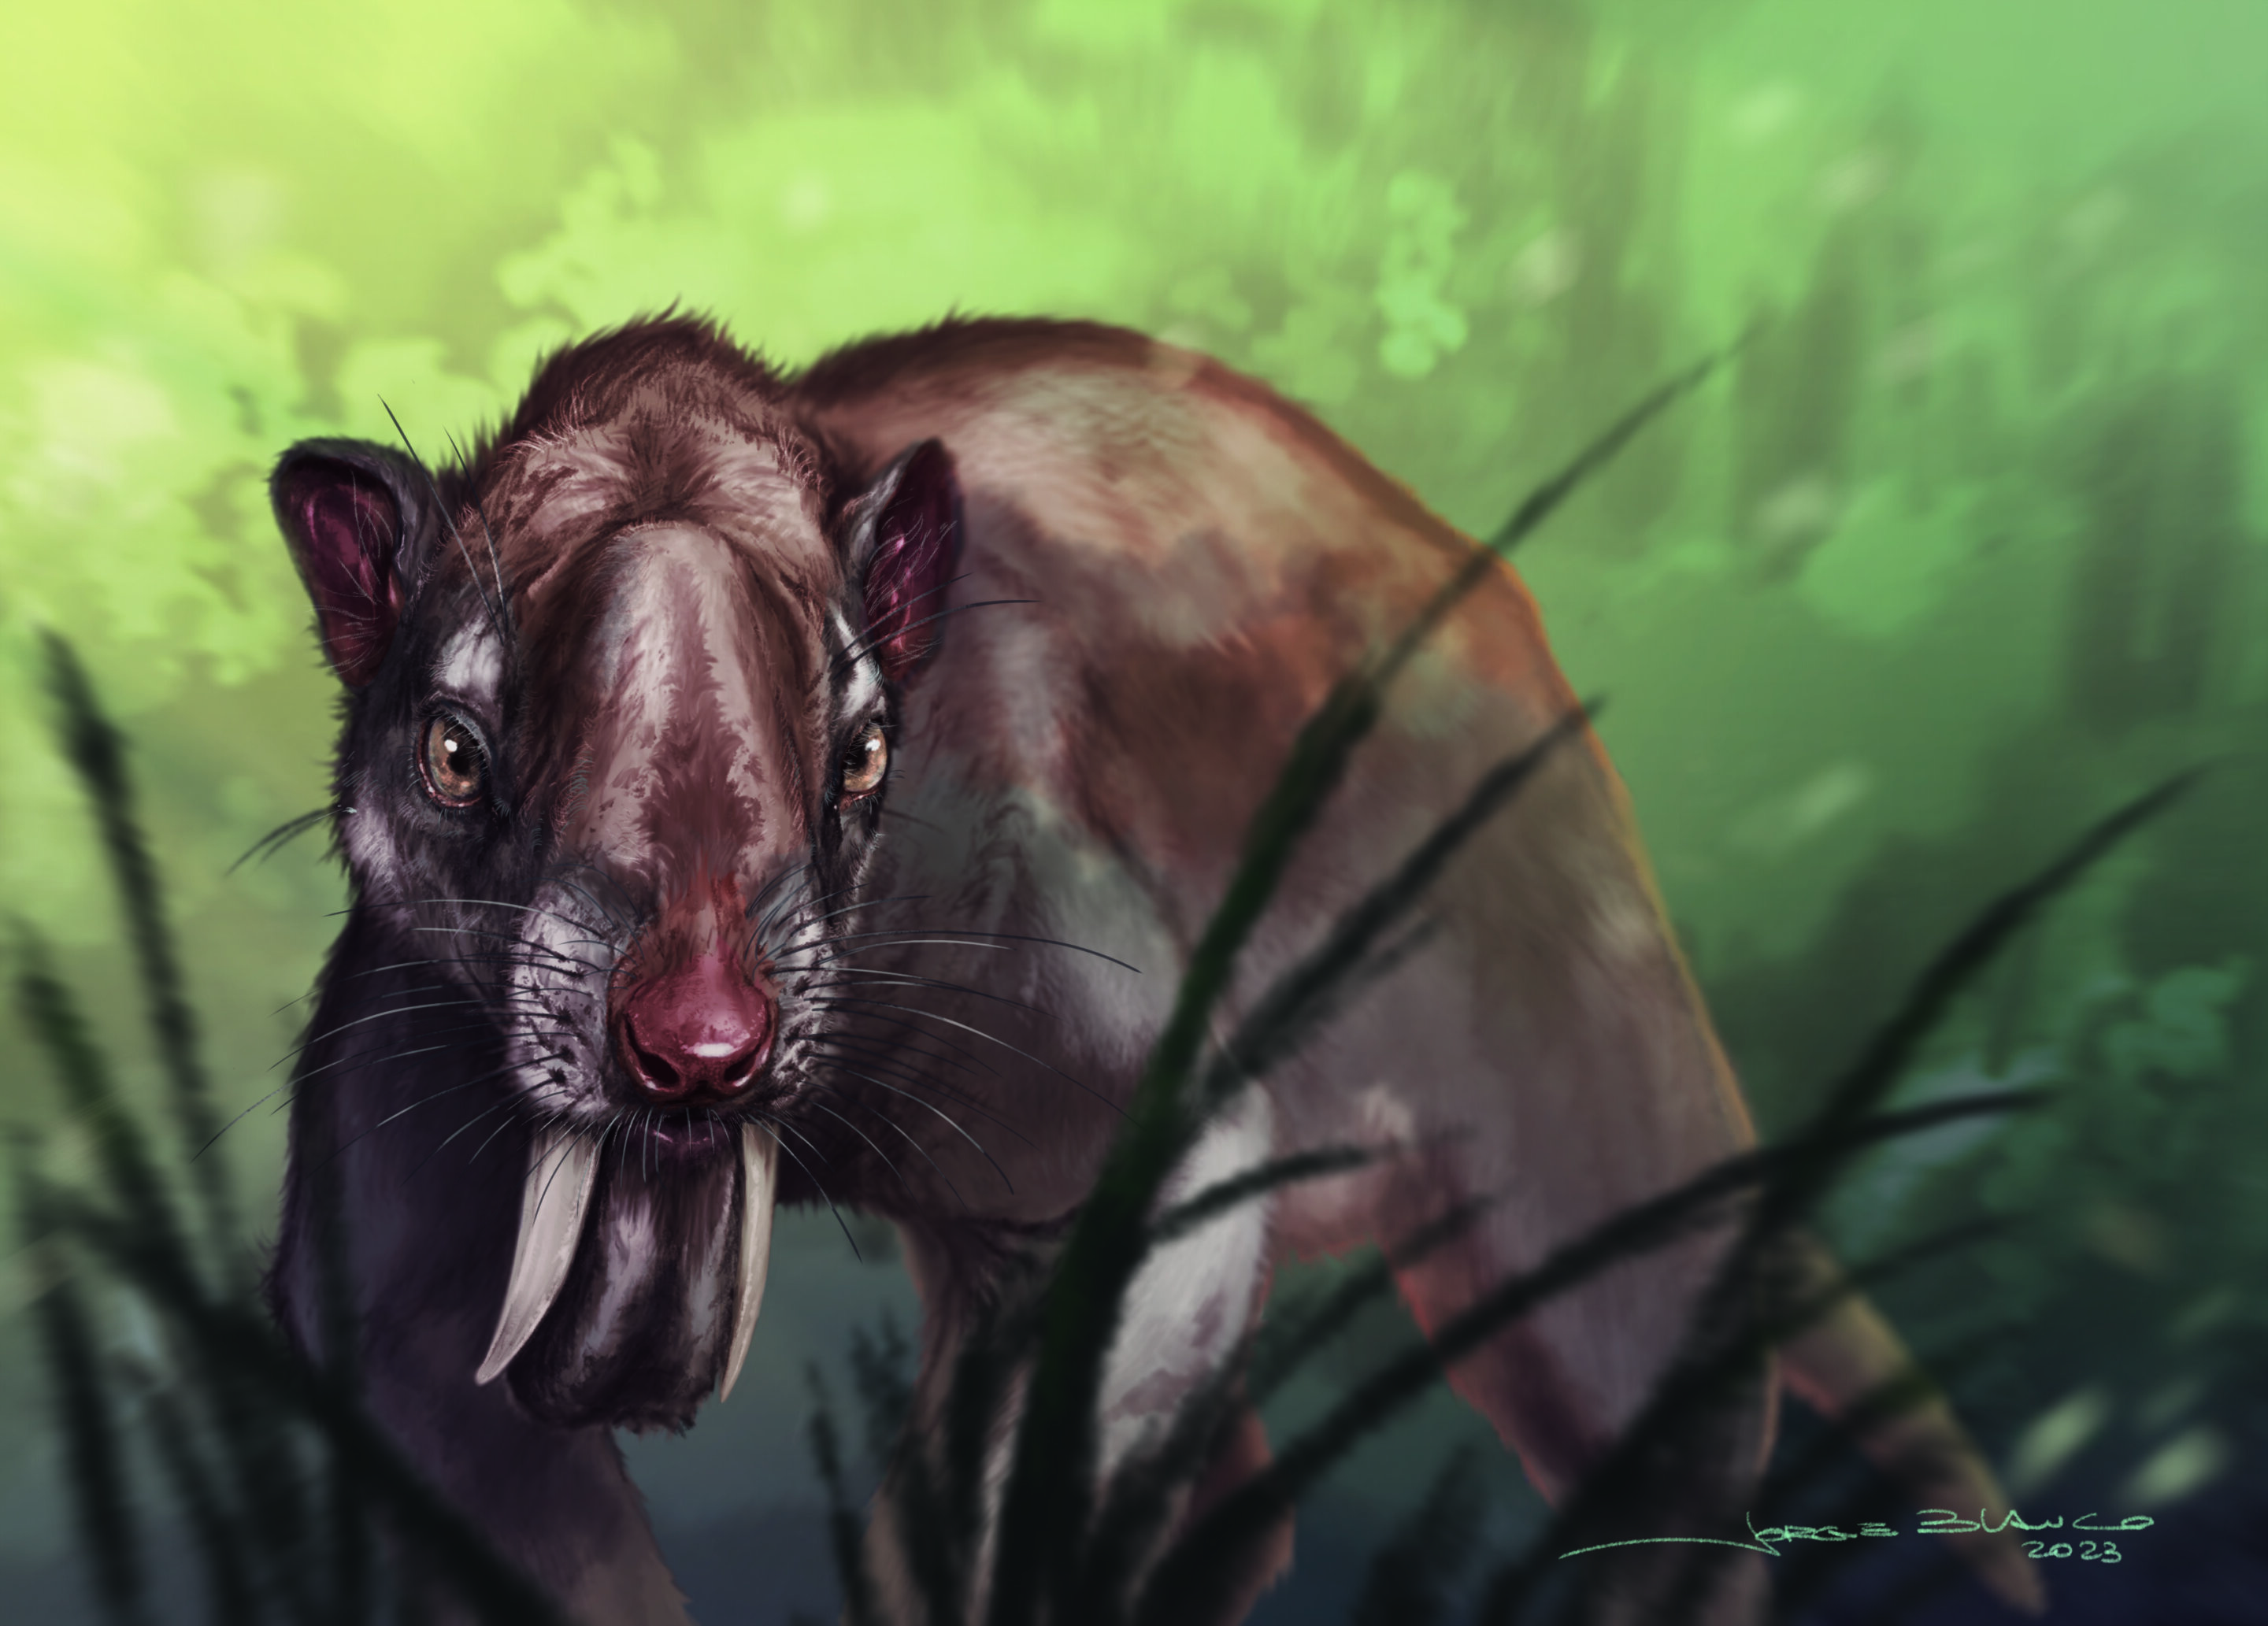 How the ‘marsupial’ thylacine saw its world